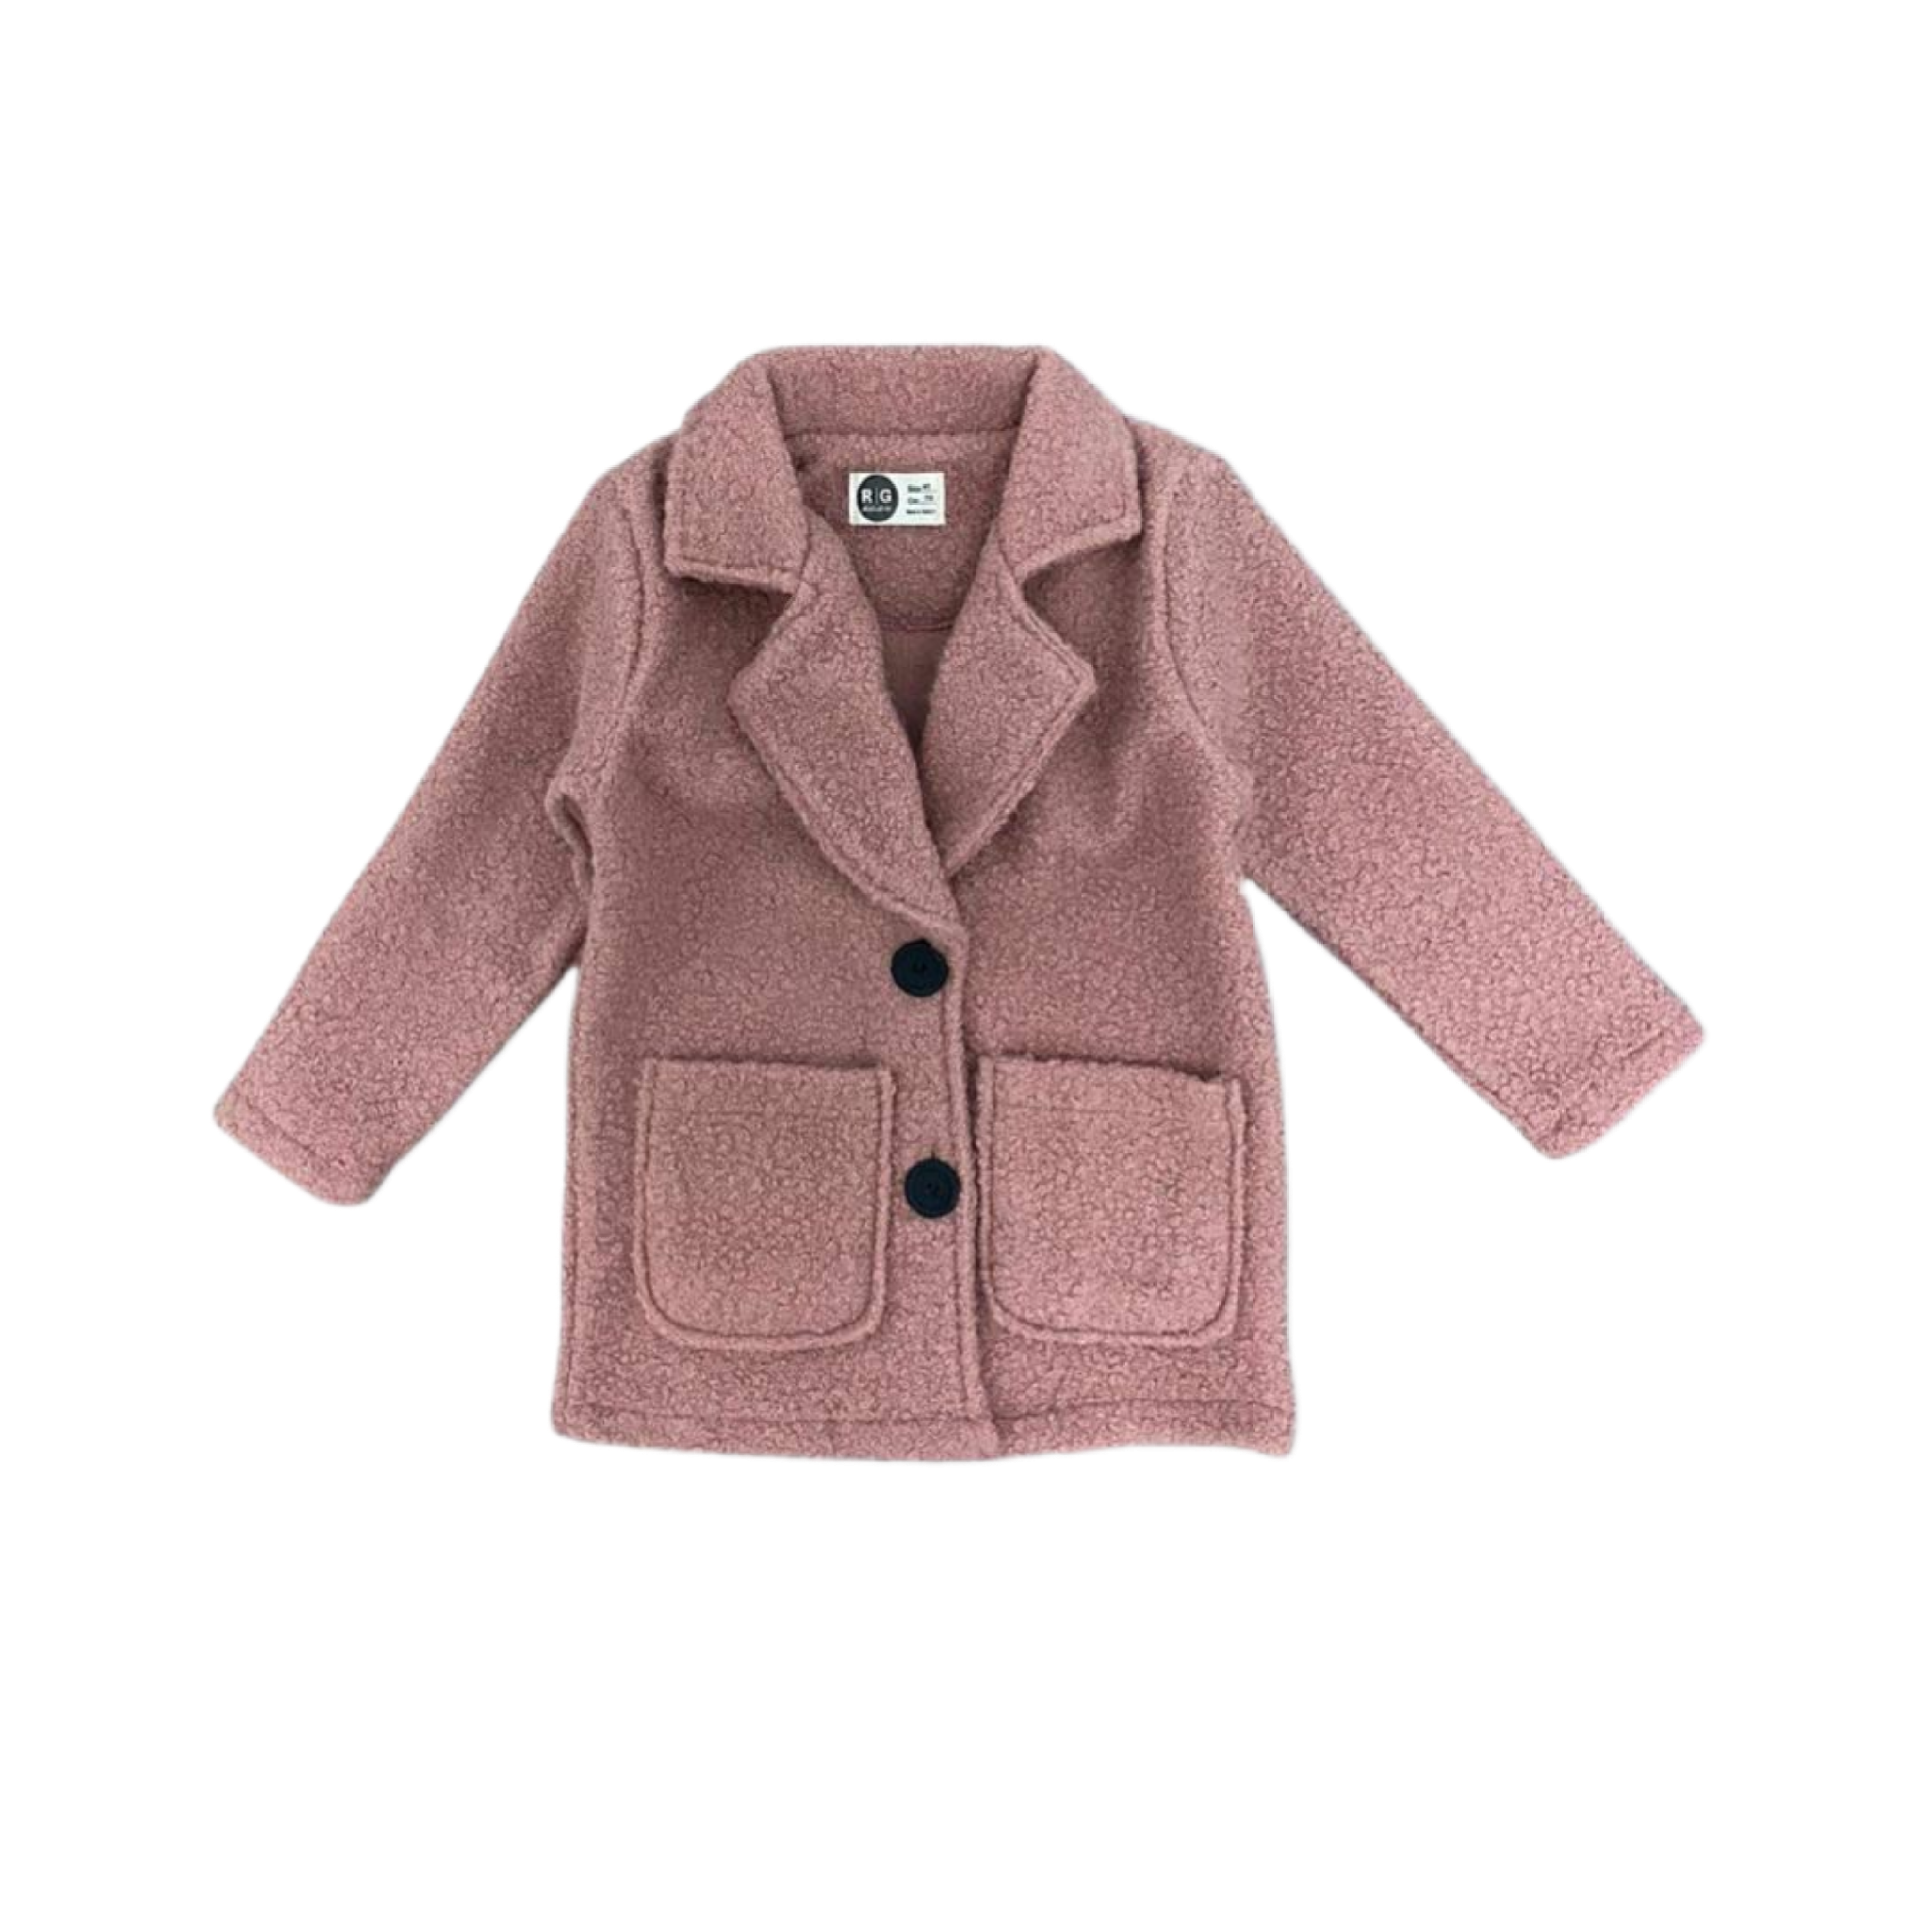 Soft Pink Seasons Coat - Soft Pink Seasons Coat - 3-4 Years - RG - Melymod